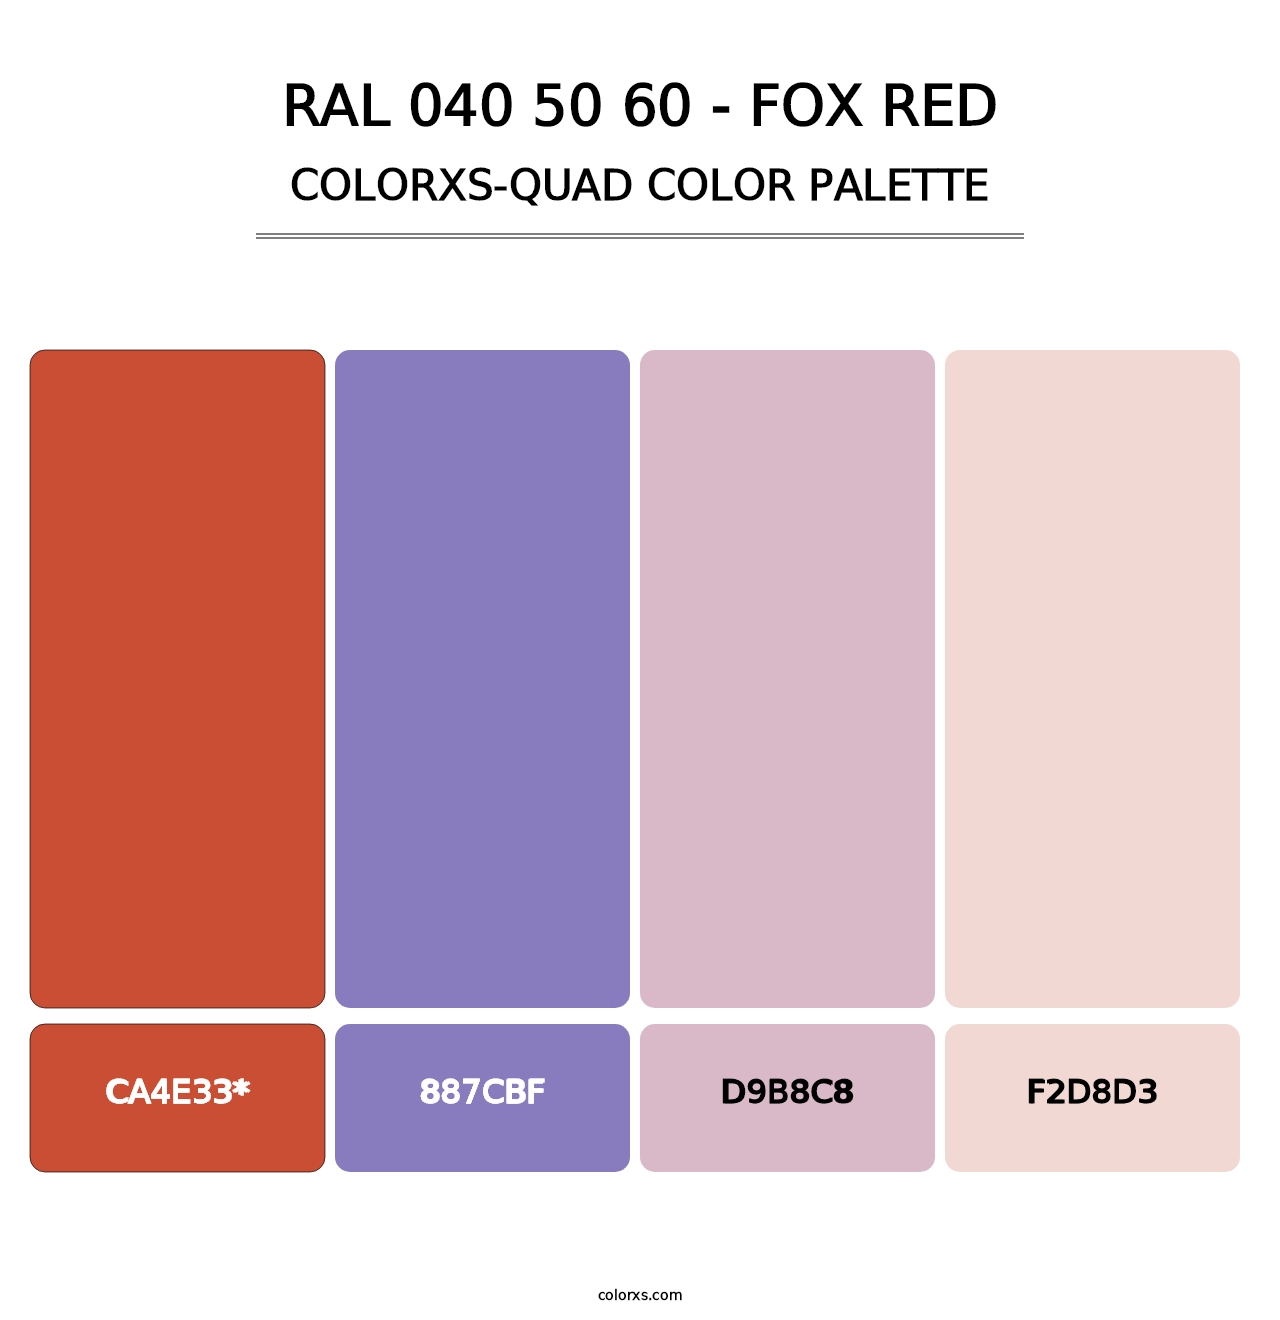 RAL 040 50 60 - Fox Red - Colorxs Quad Palette